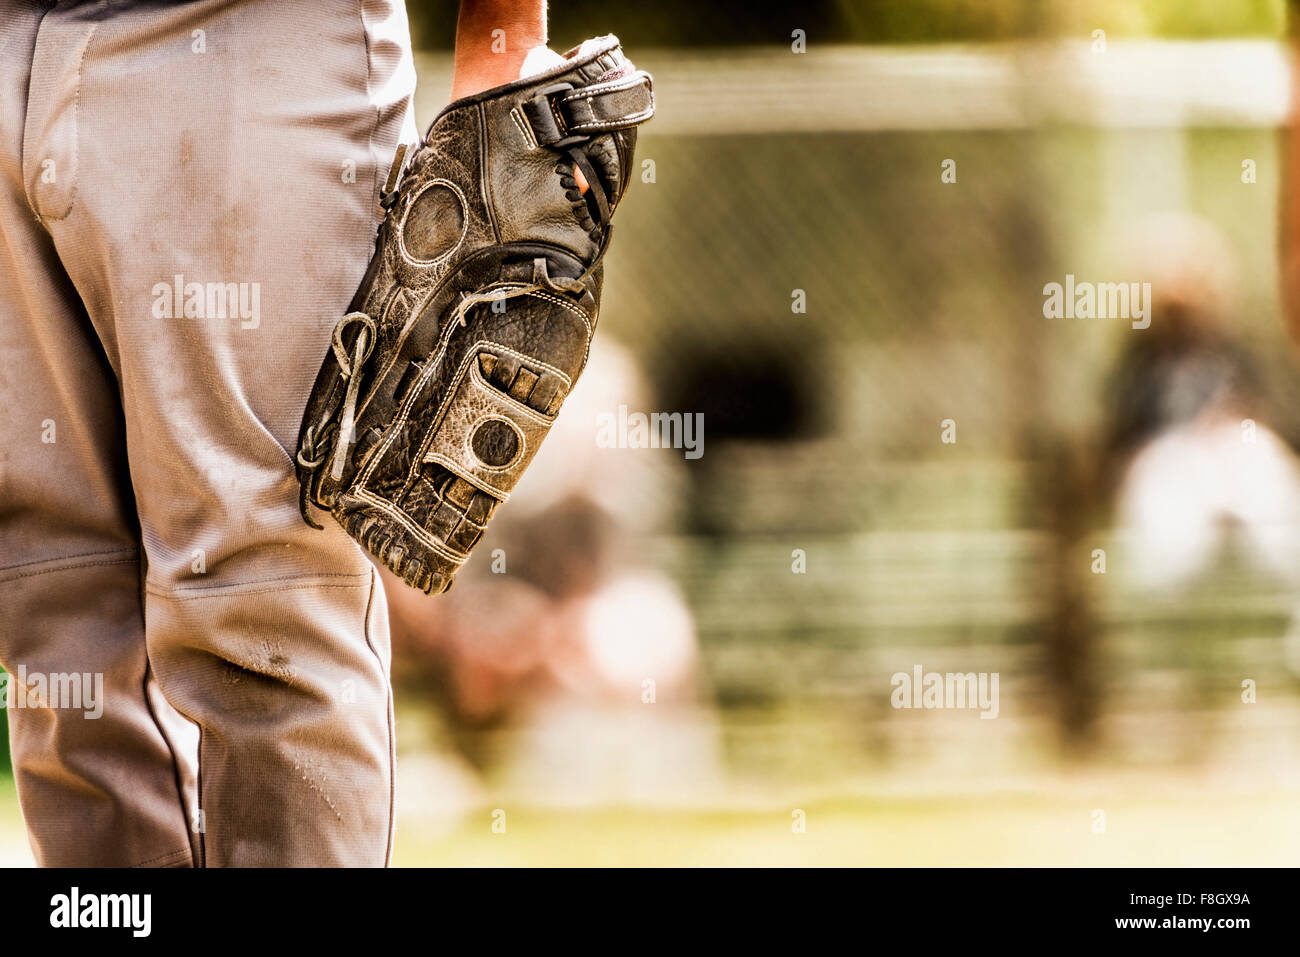 Baseball player wearing baseball glove Stock Photo